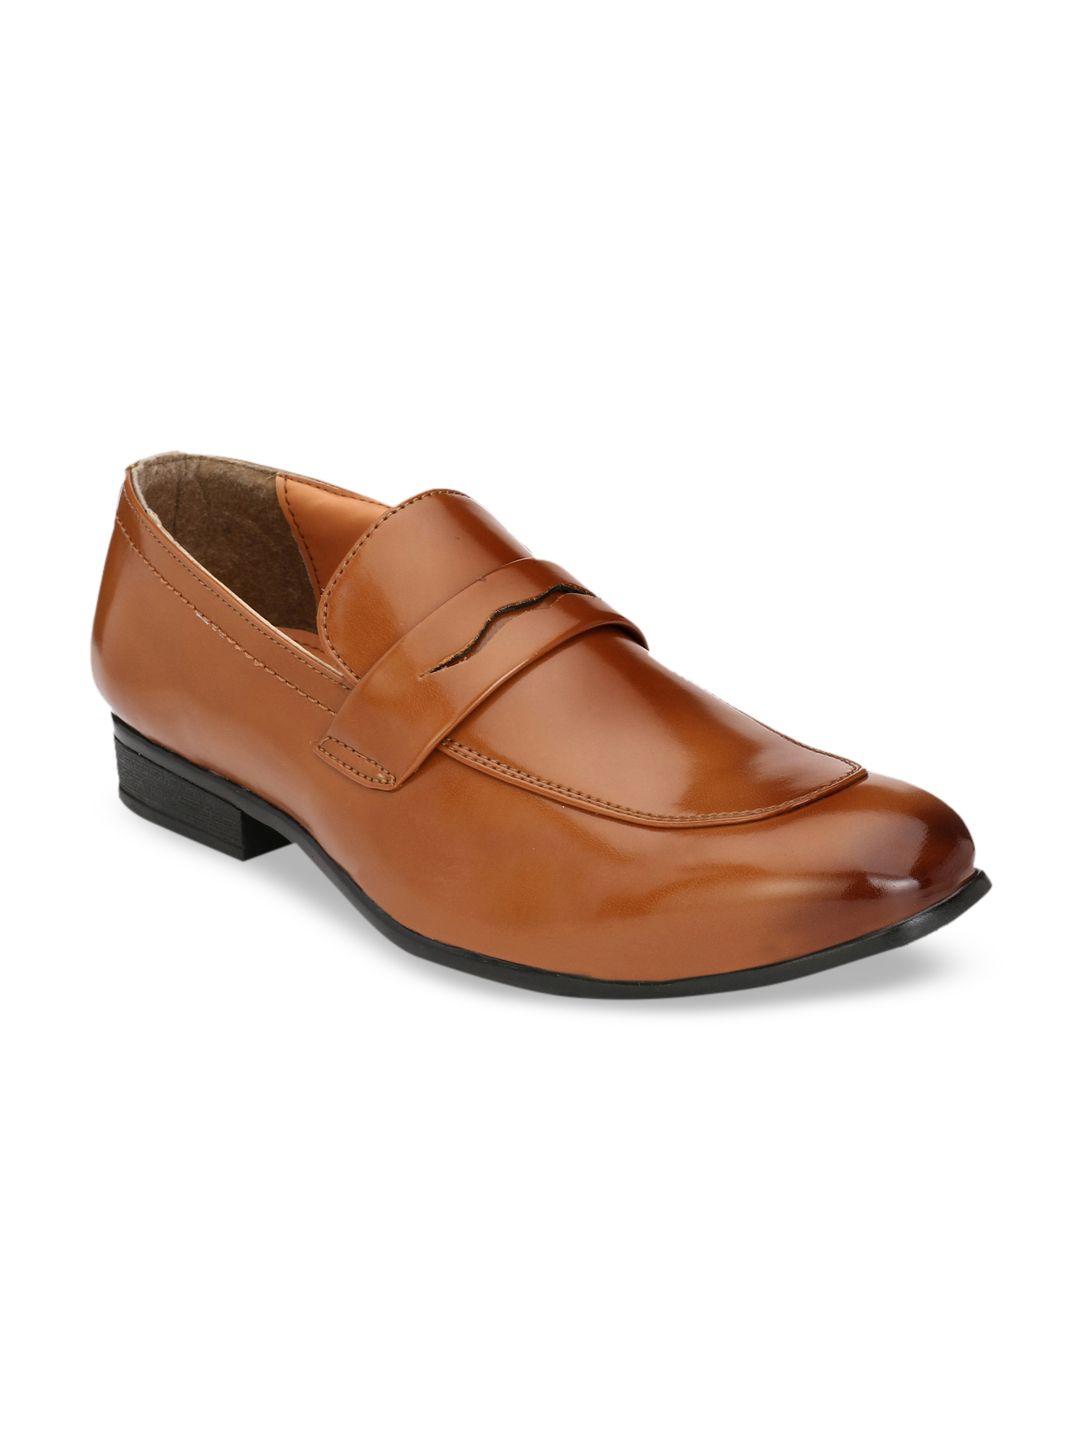 hirels men tan brown solid formal loafers